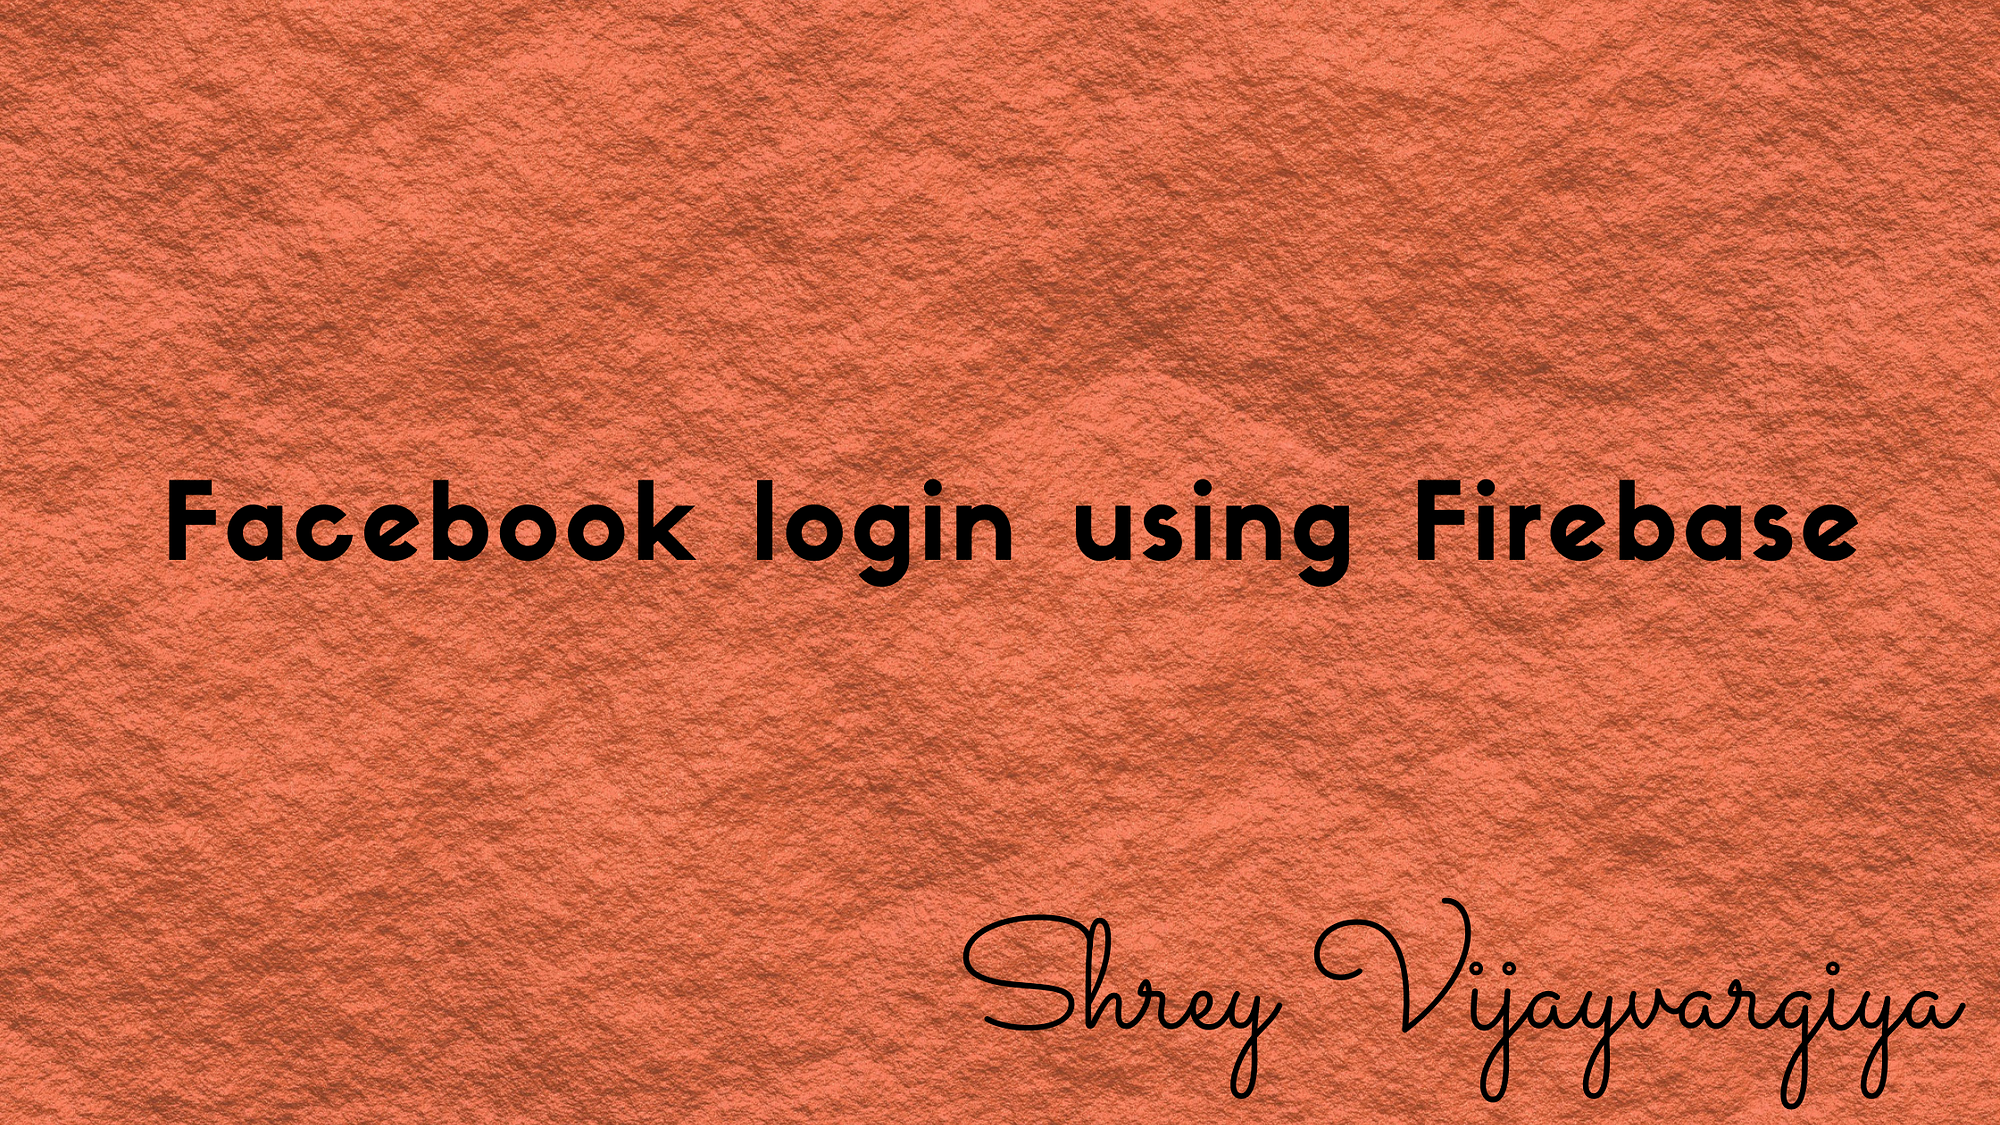 Firebase Login with Facebook